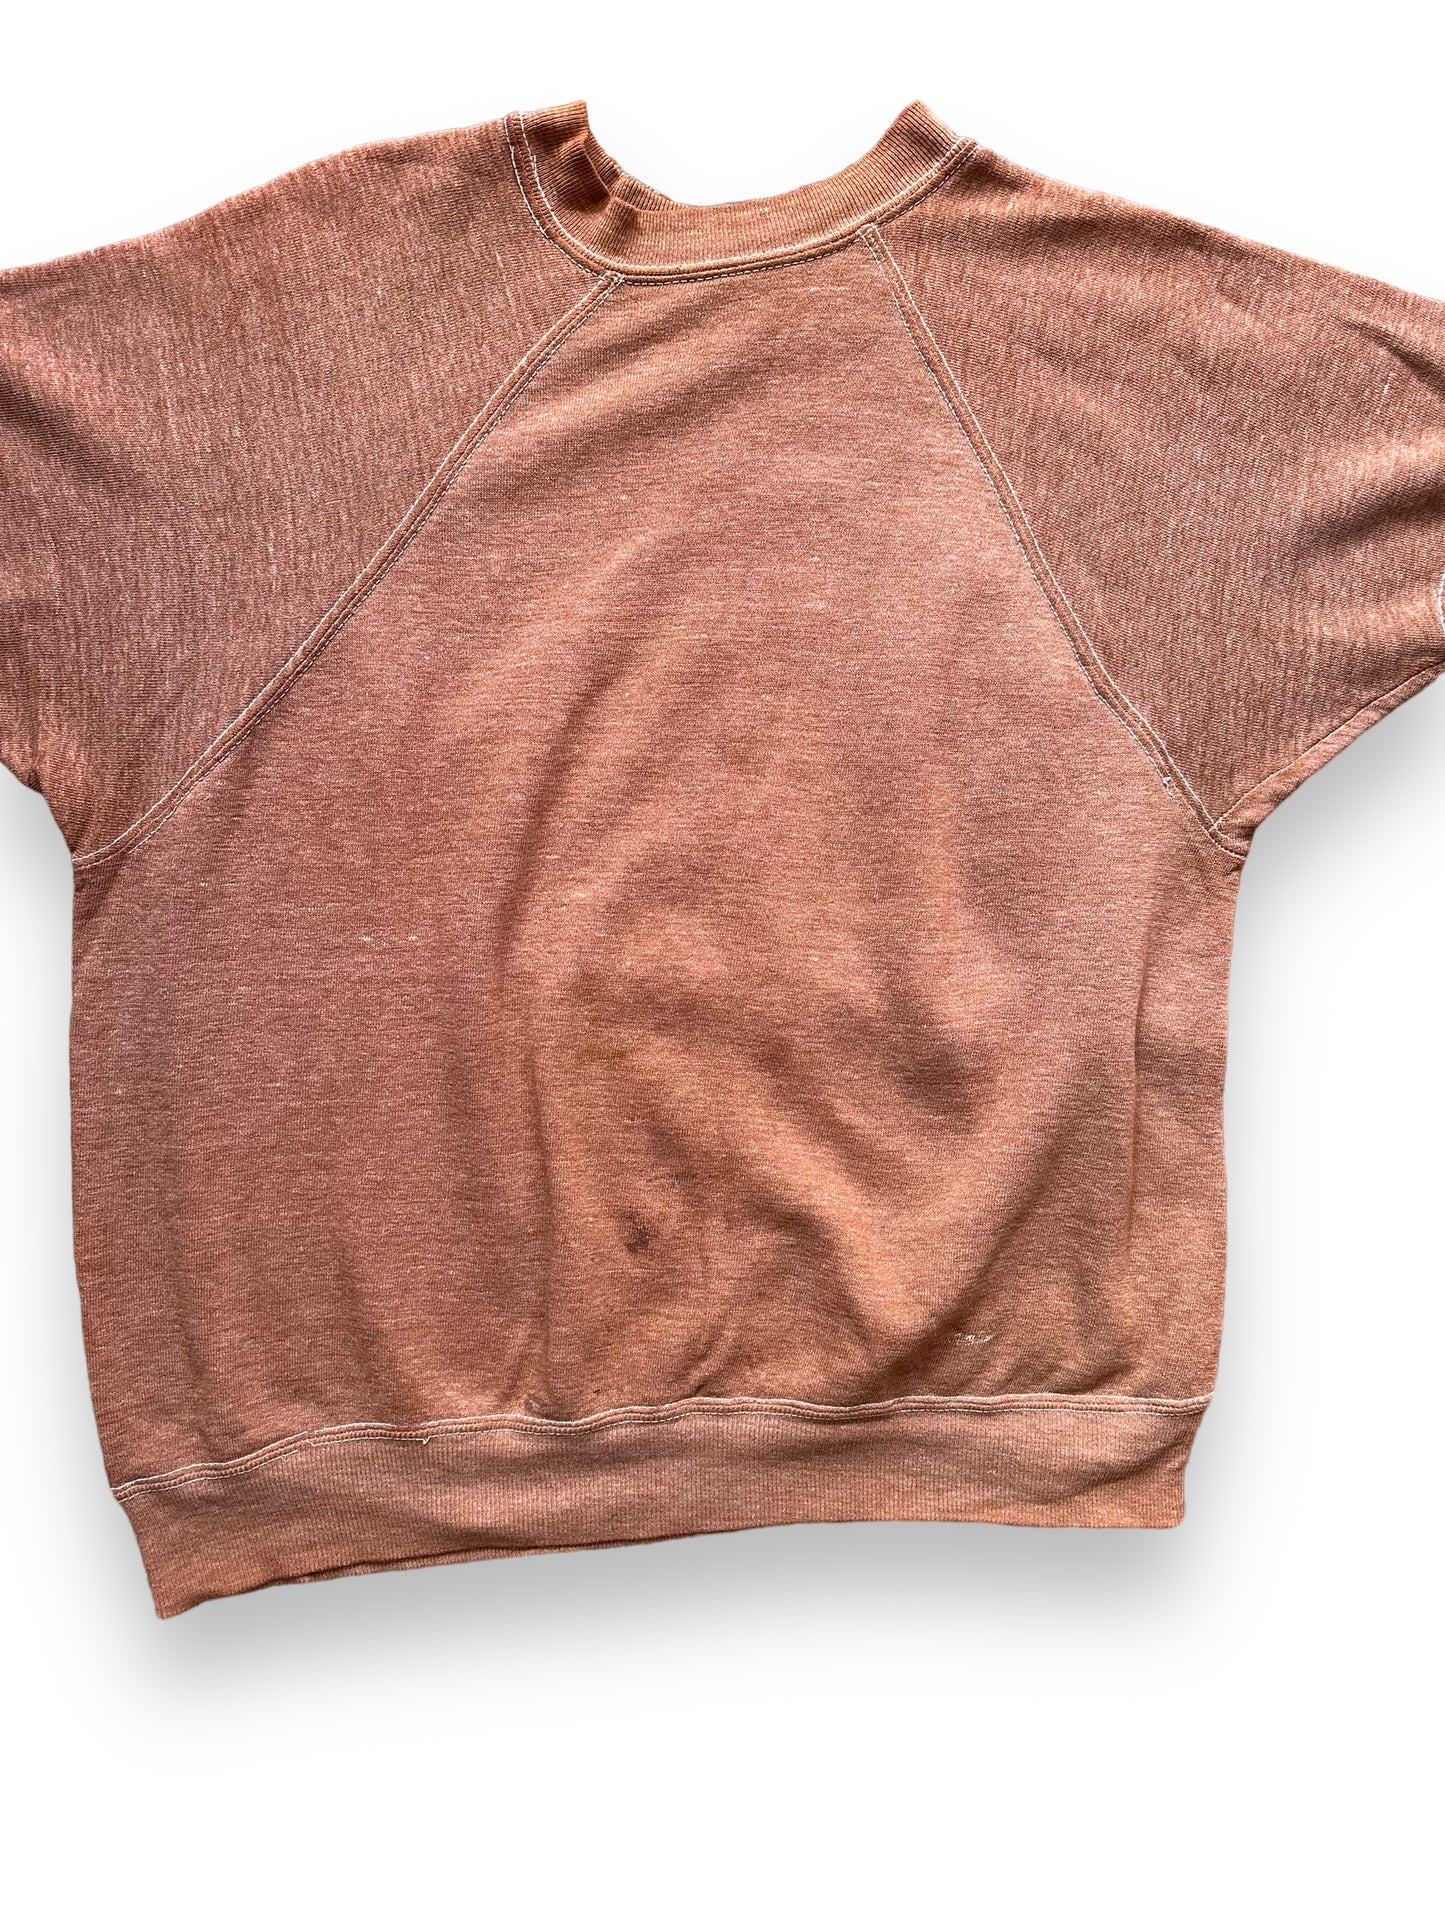 Front Detail on Vintage Brown Short Sleeve Crewneck Sweatshirt SZ M | Barn Owl Vintage Clothing | Seattle Vintage Sweatshirts